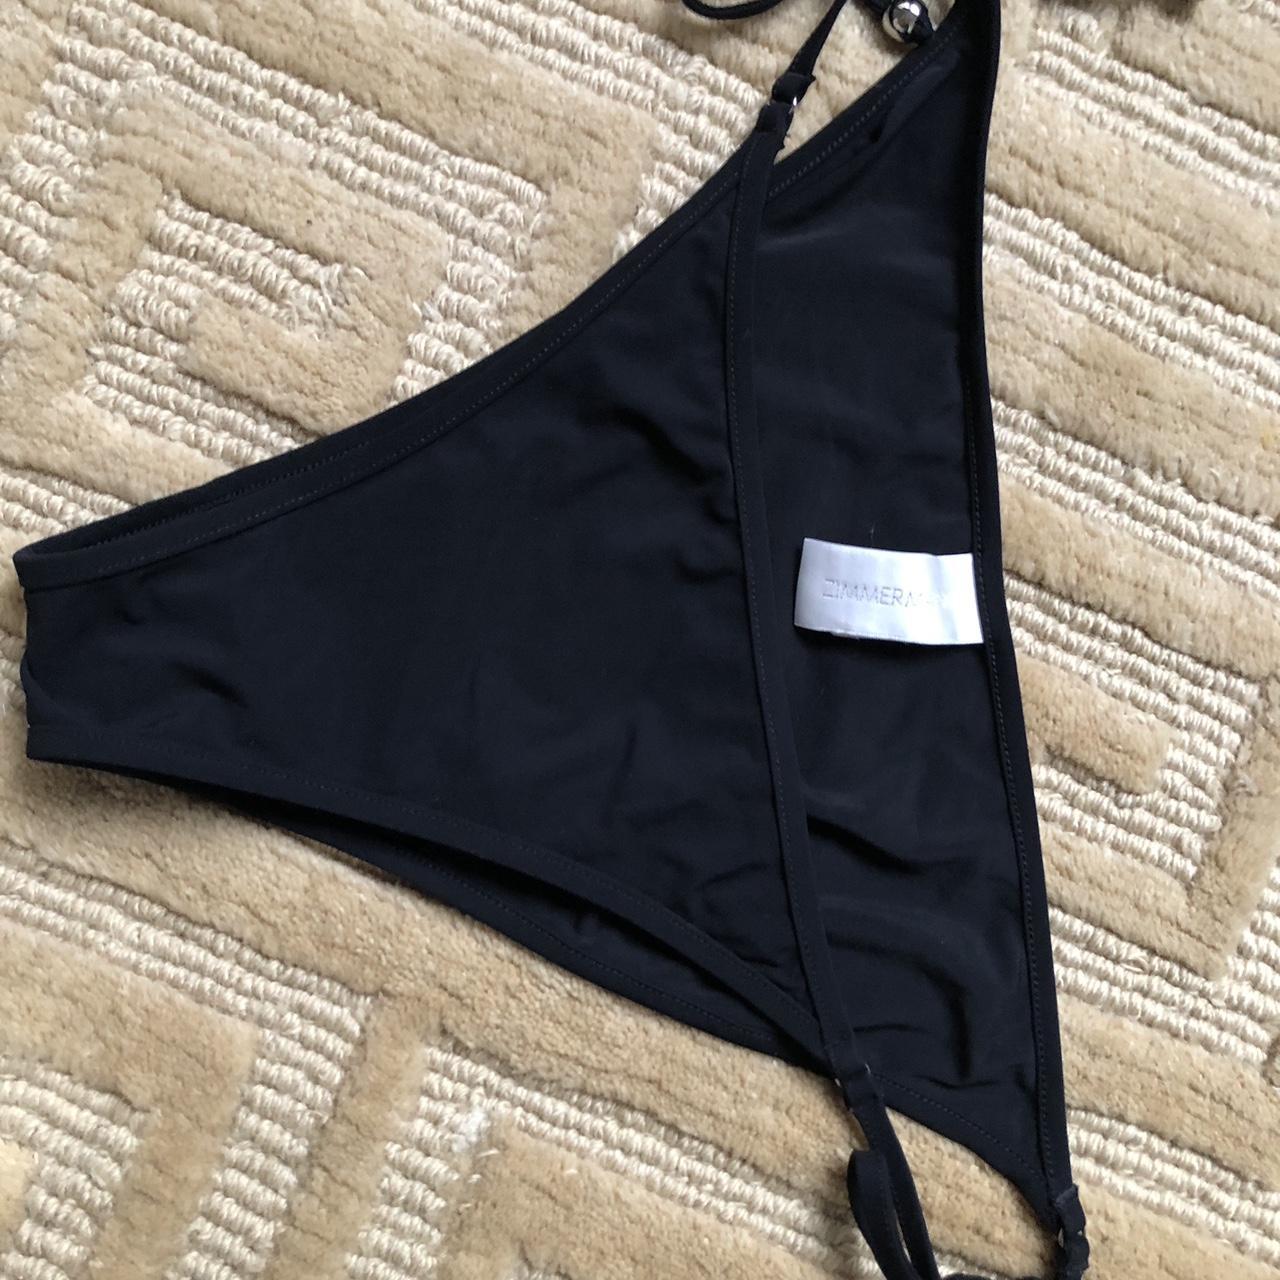 Zimmerman bathing suit bottoms - Depop